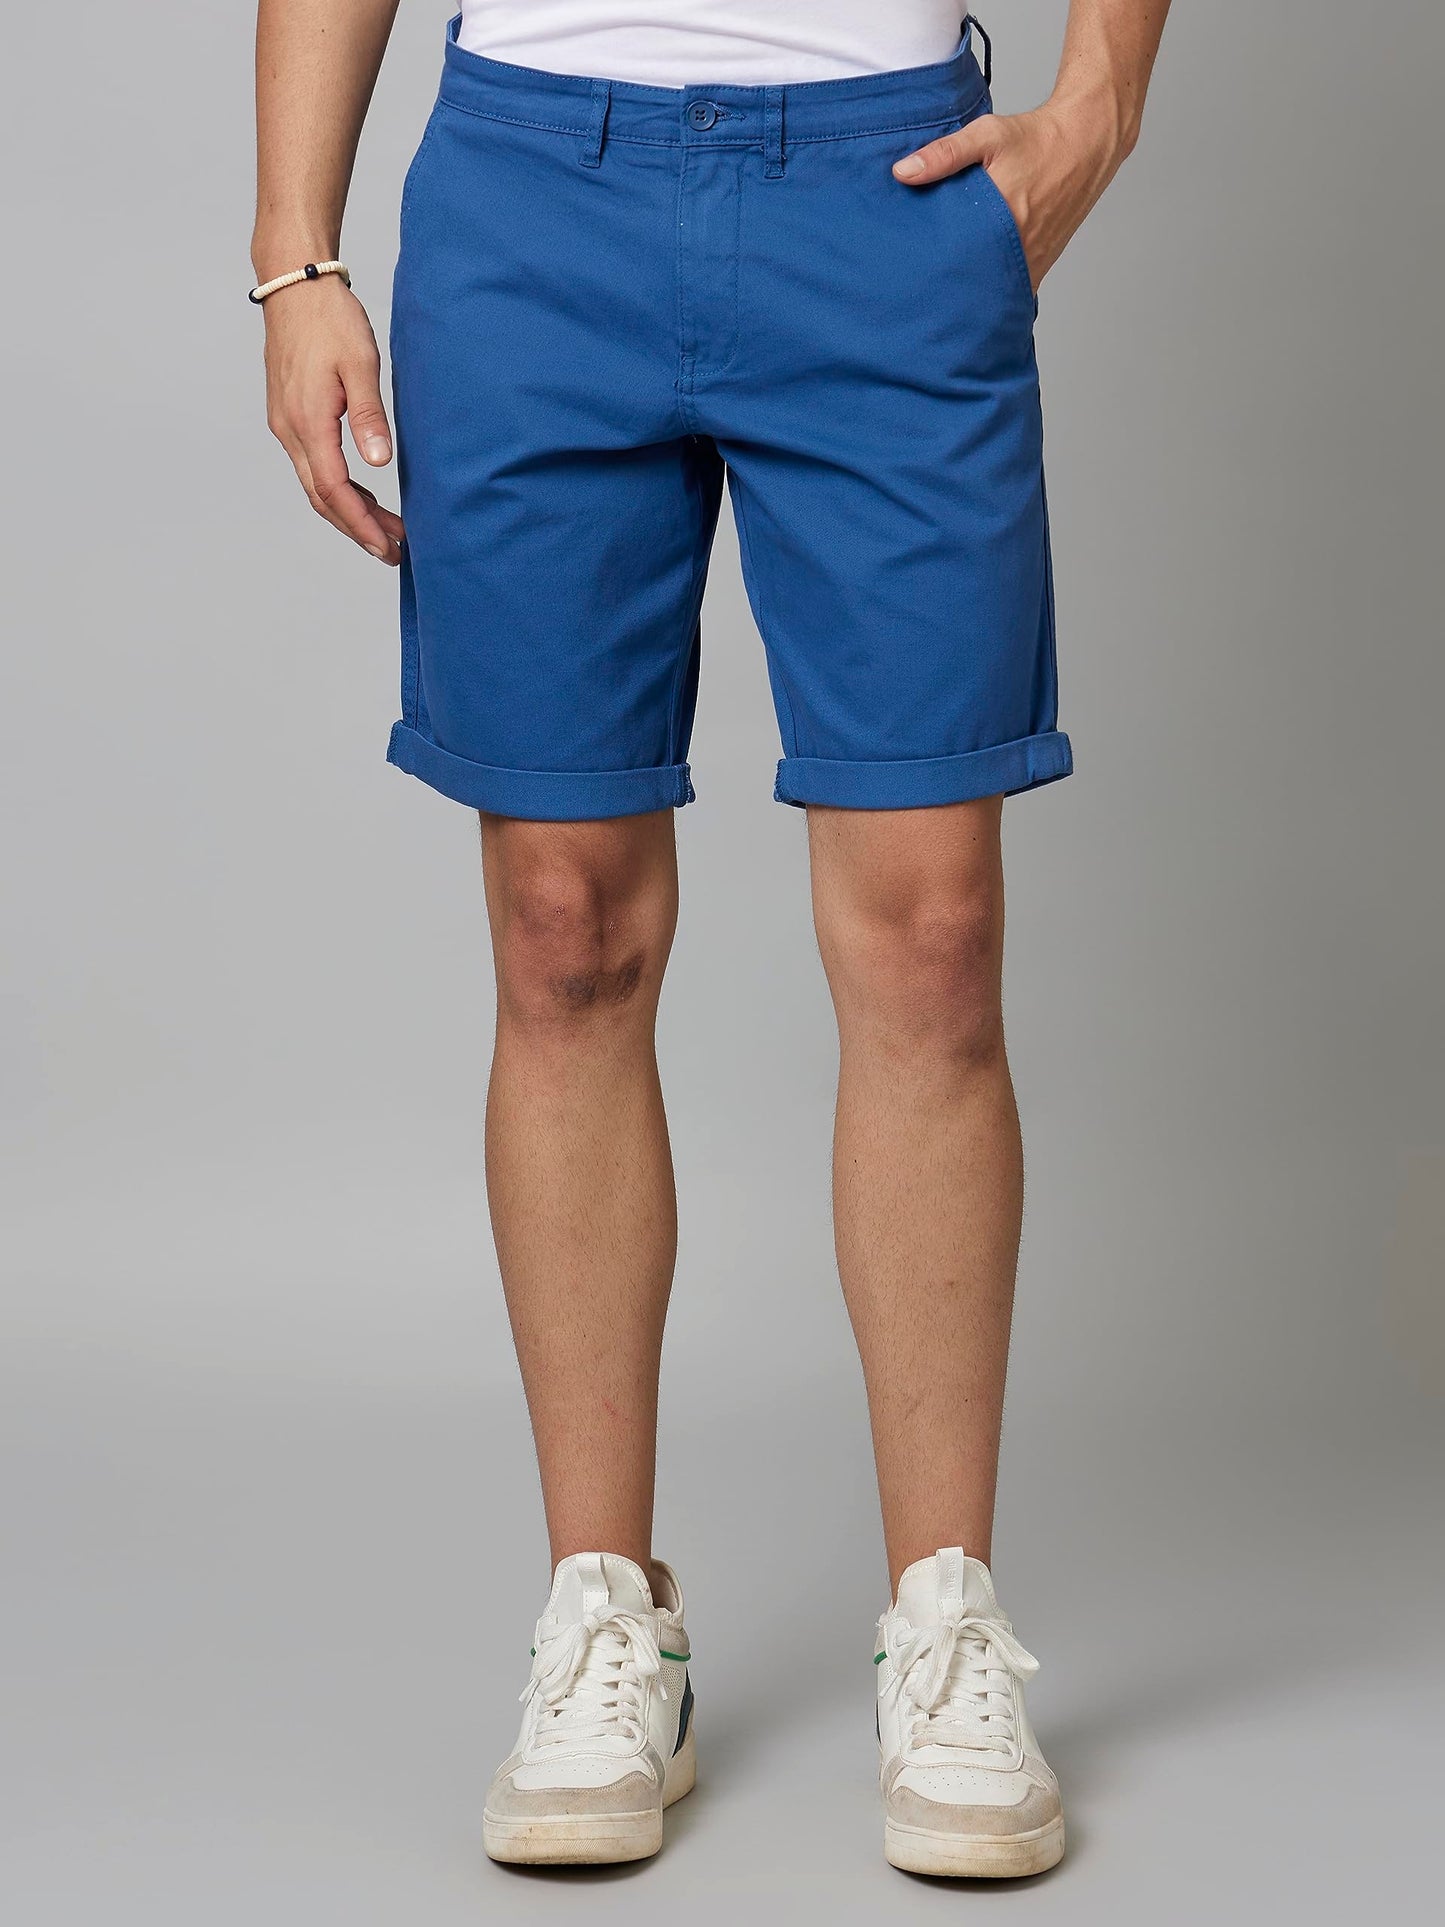 Celio Men's Solid Blue Chino Shorts